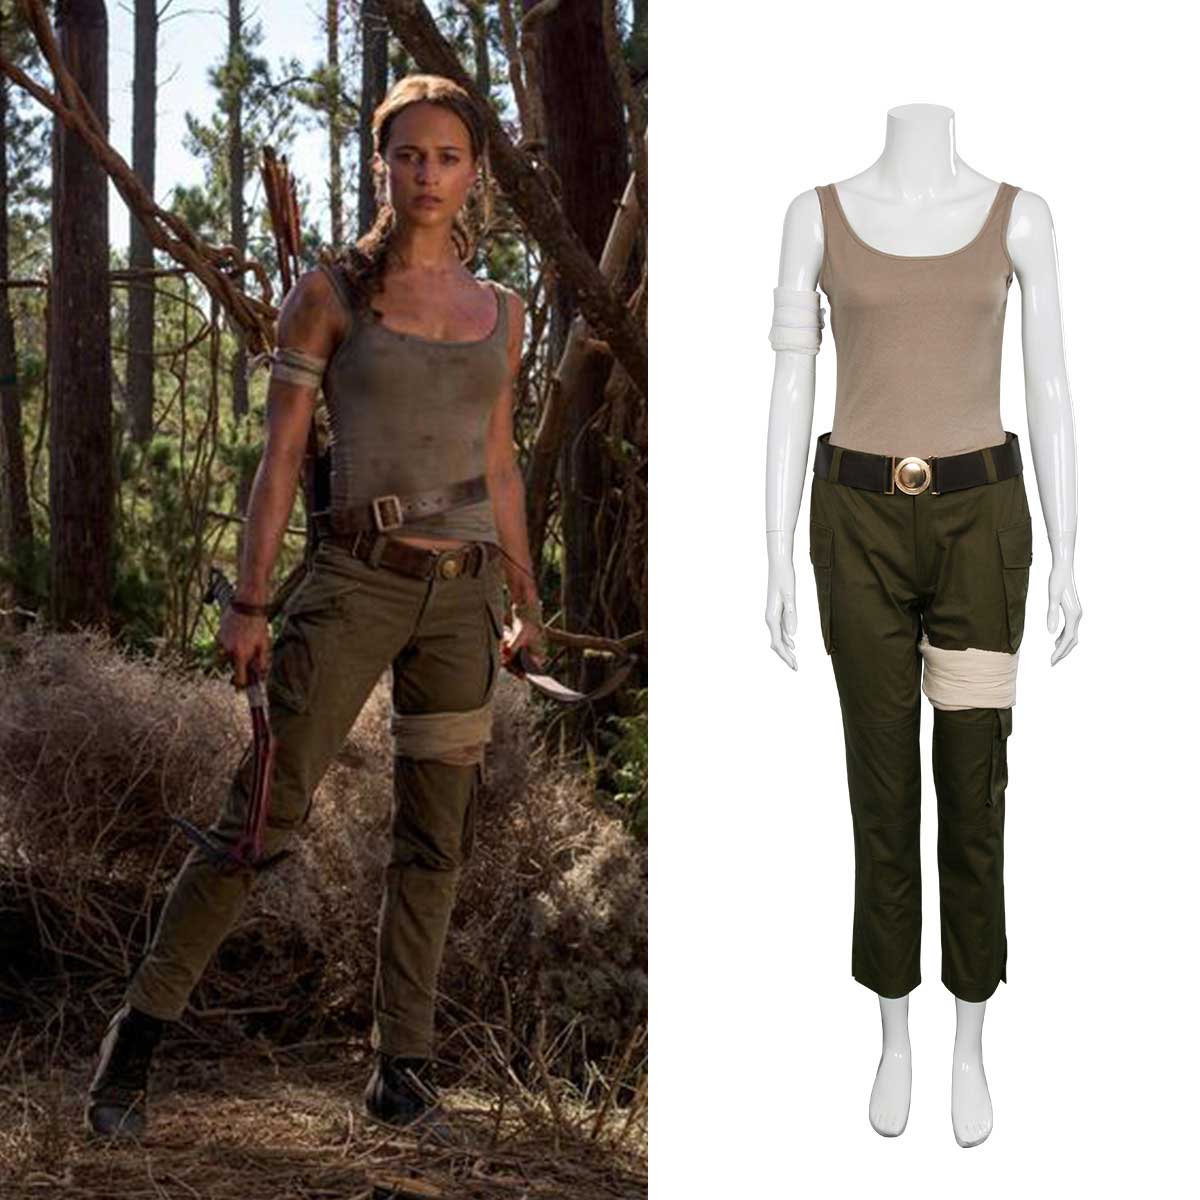 2018 Movie Tomb Raider Lara Croft Outfit Cosplay Costume